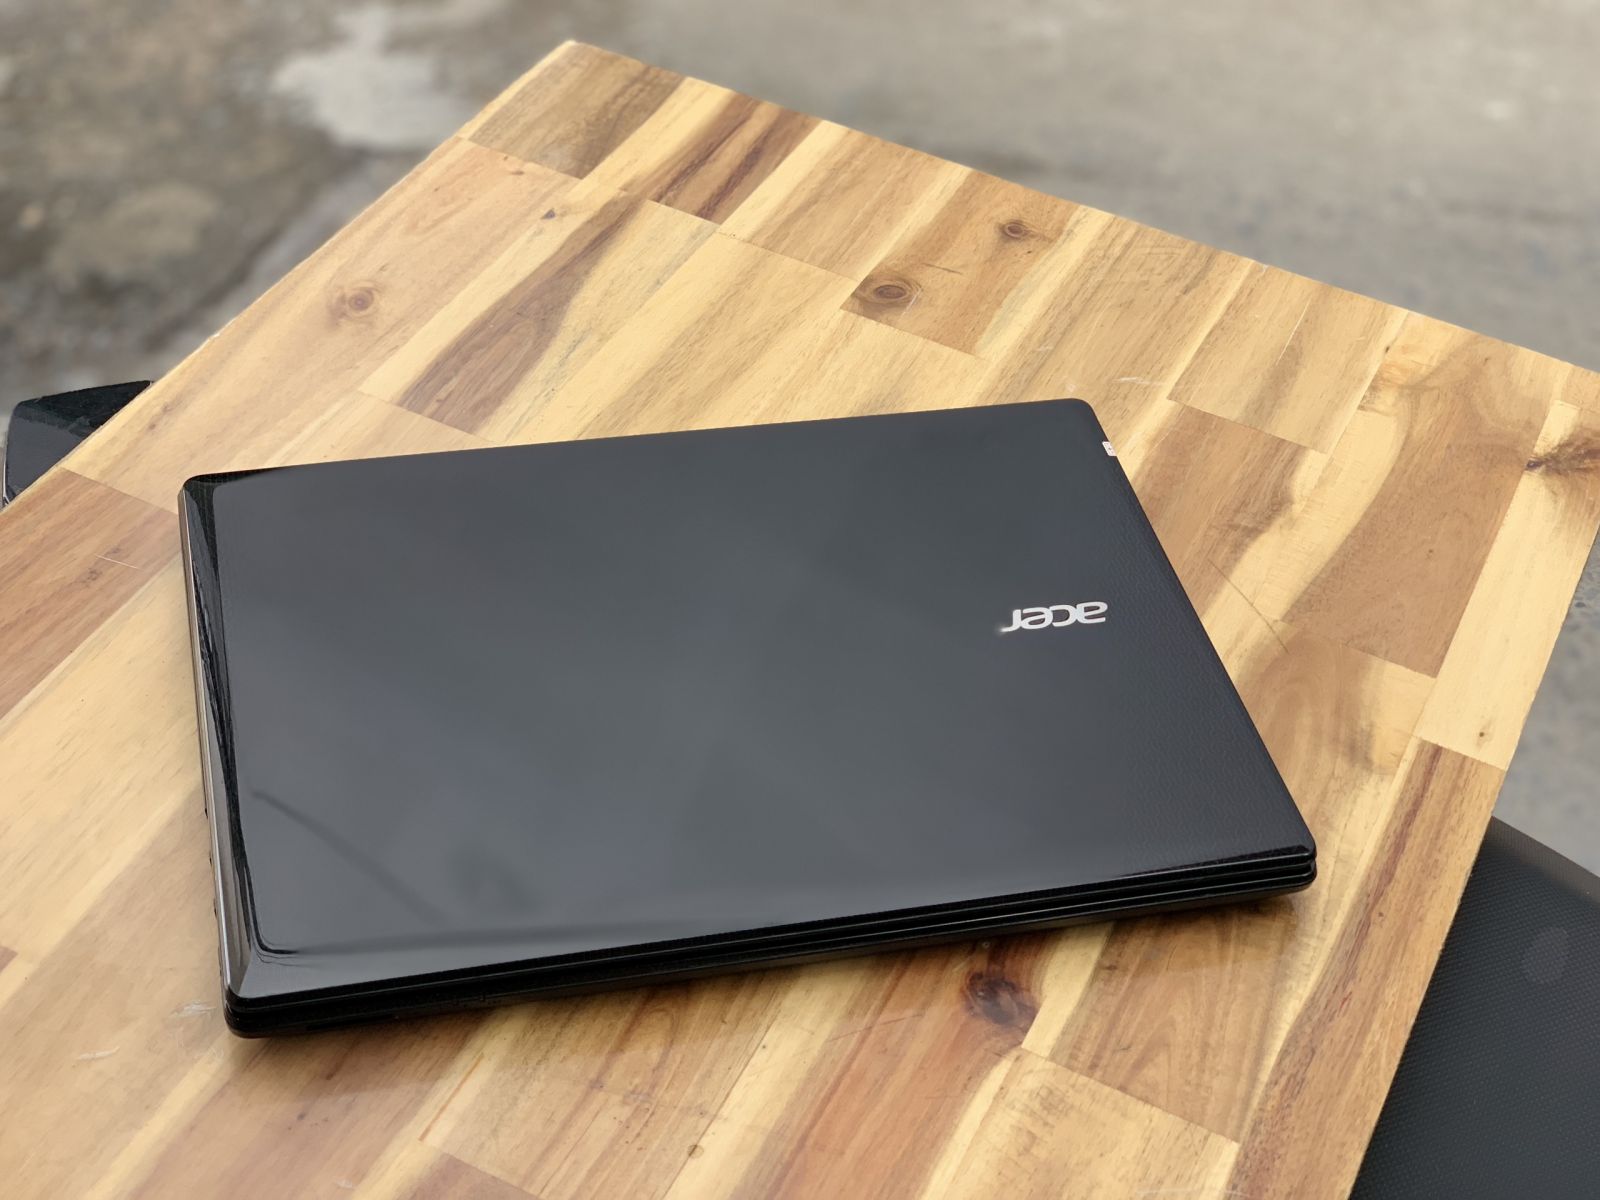 Laptop Acer E5-471/ i5 4210U/ 4G/ 500G/ 14in/ Đẹp Keng/ Zin 100%/ Giá rẻ4